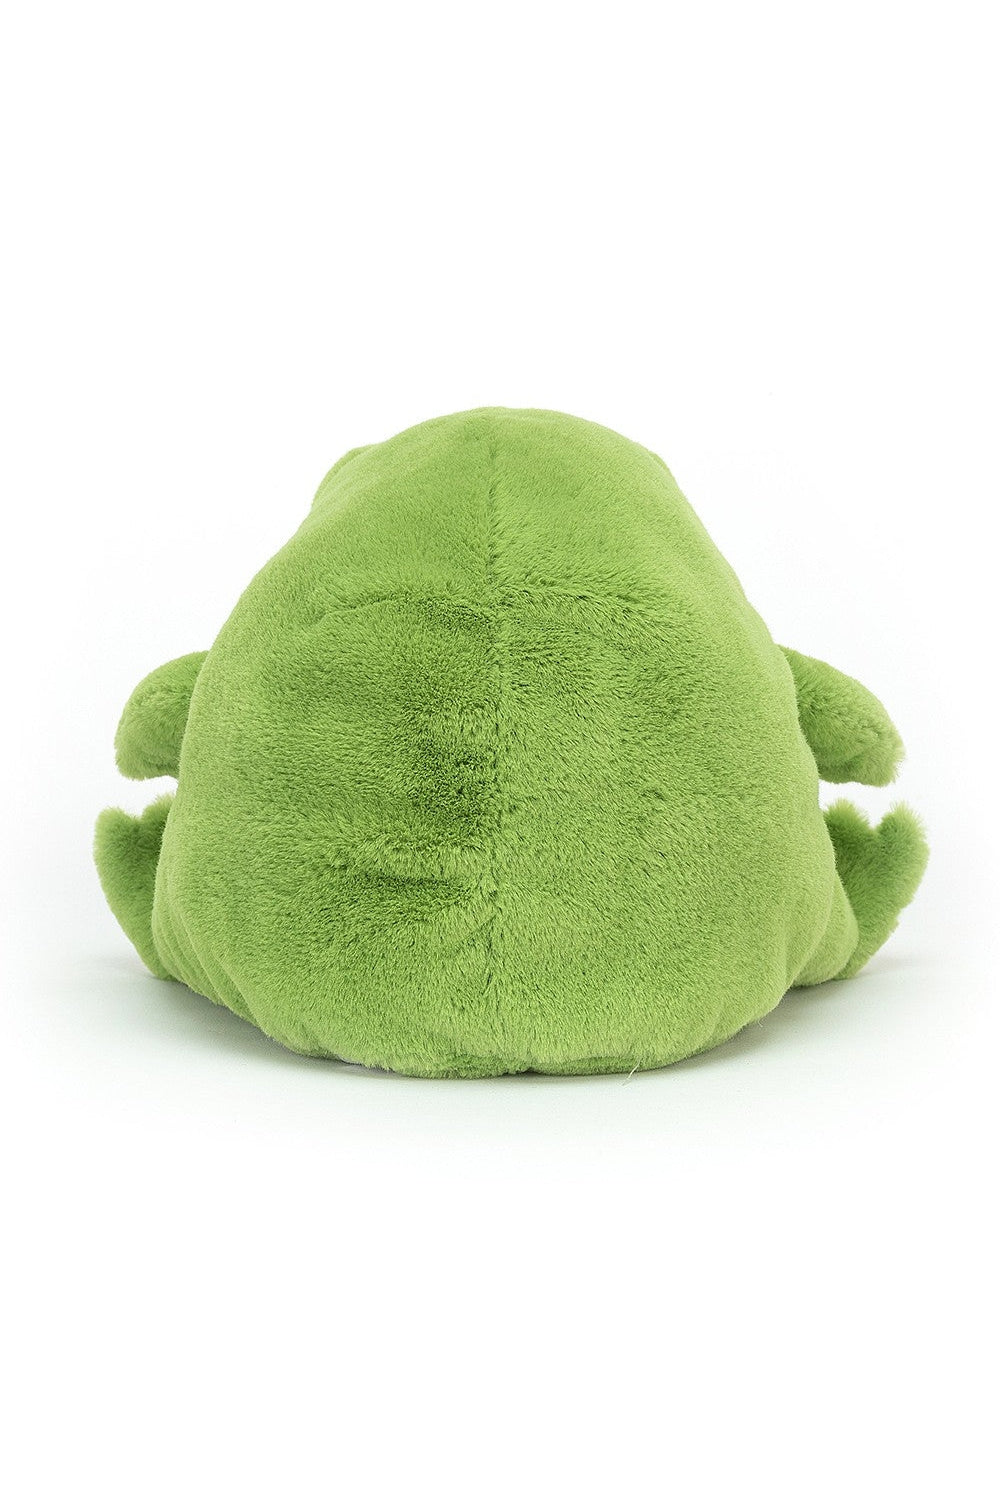 Jellycat Plush] RARE Ricky Rain Frog Plushy Soft Toy, Hobbies